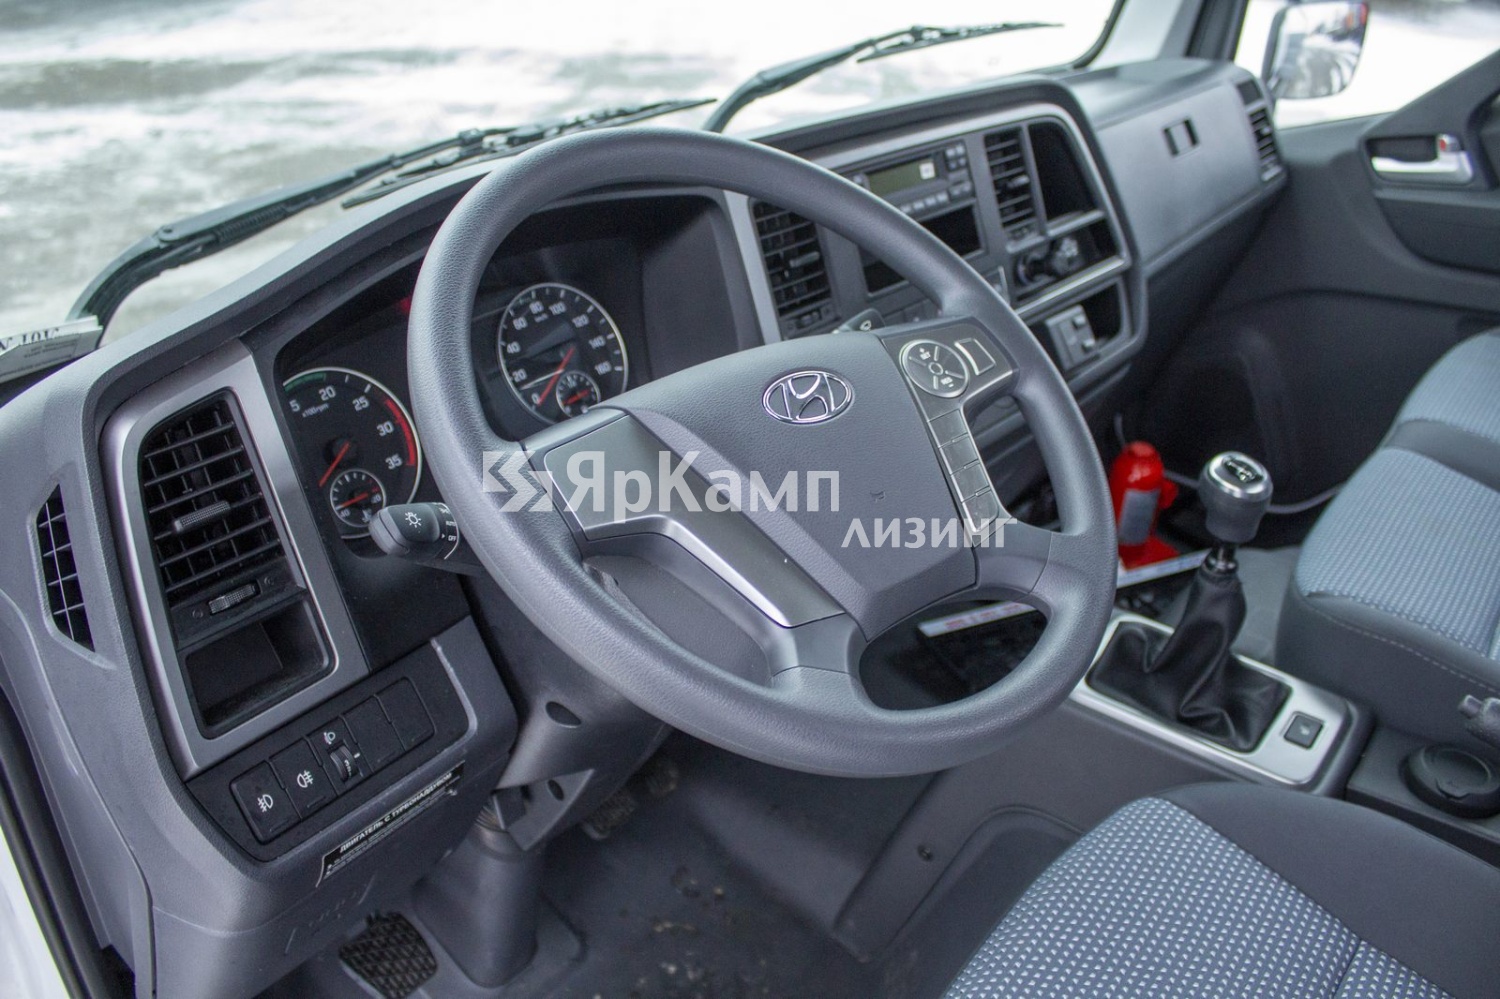 "ЯрКамп-Лизинг" поставил на условиях лизинга бортовой автомобиль на шасси HYUNDAI Mighty EX9 